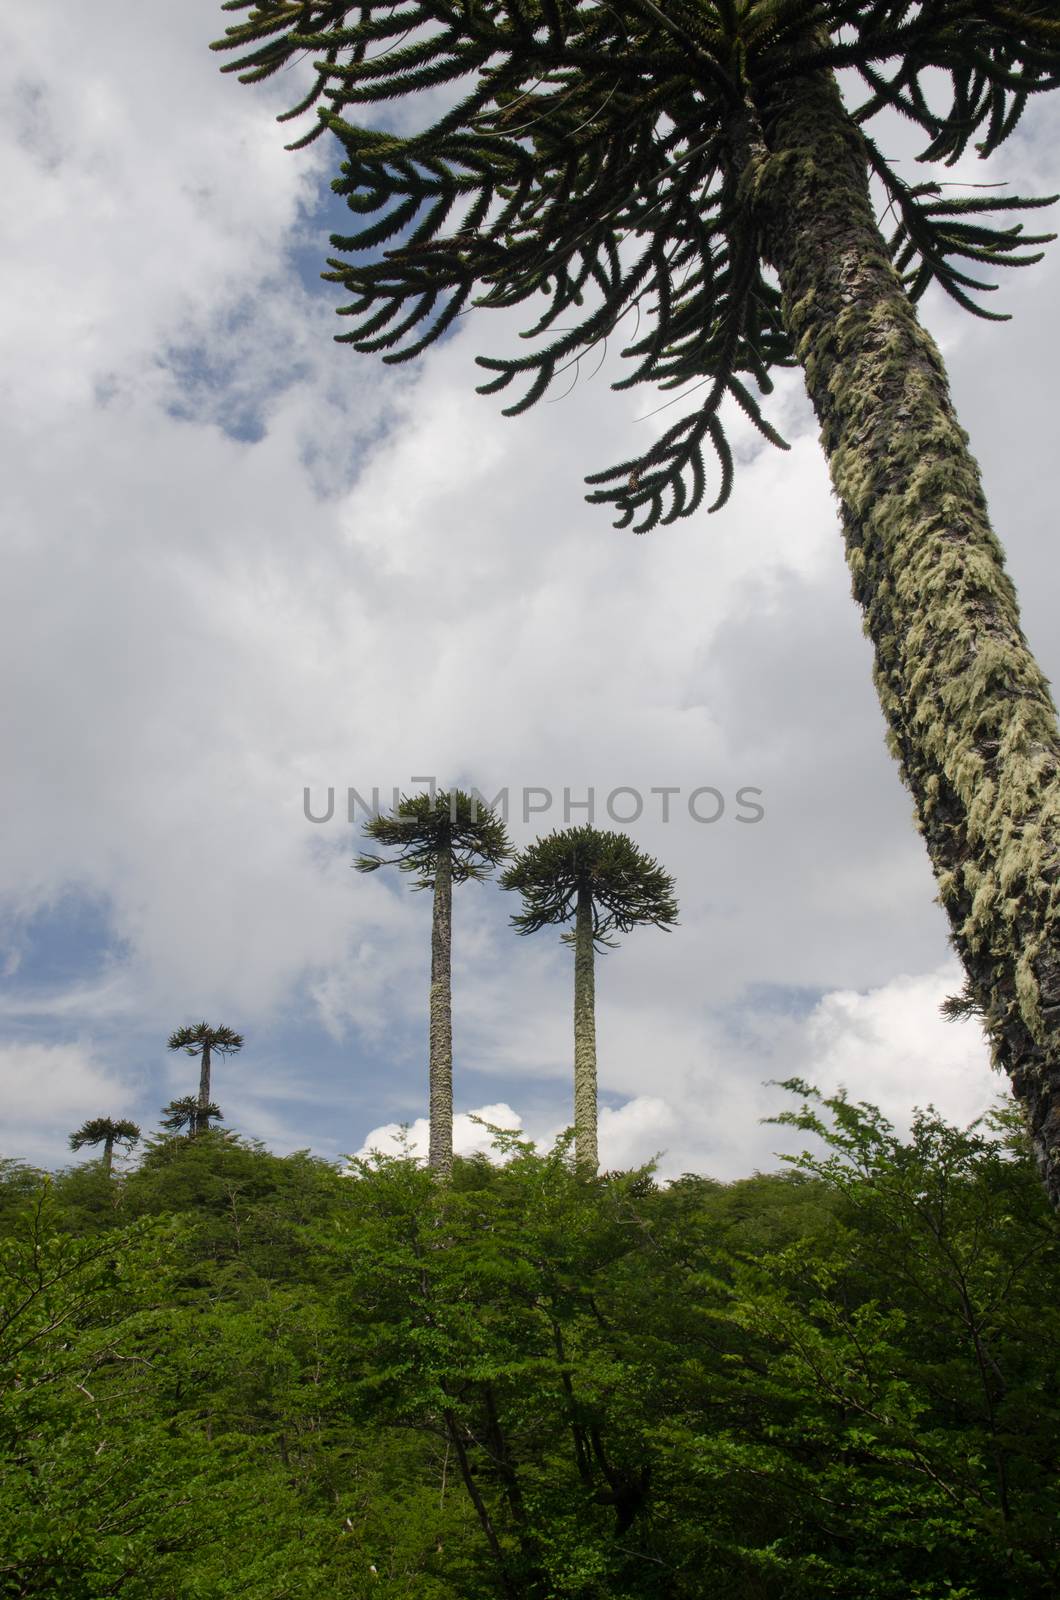 Scrubland with monkey puzzle trees Araucaria araucana. by VictorSuarez